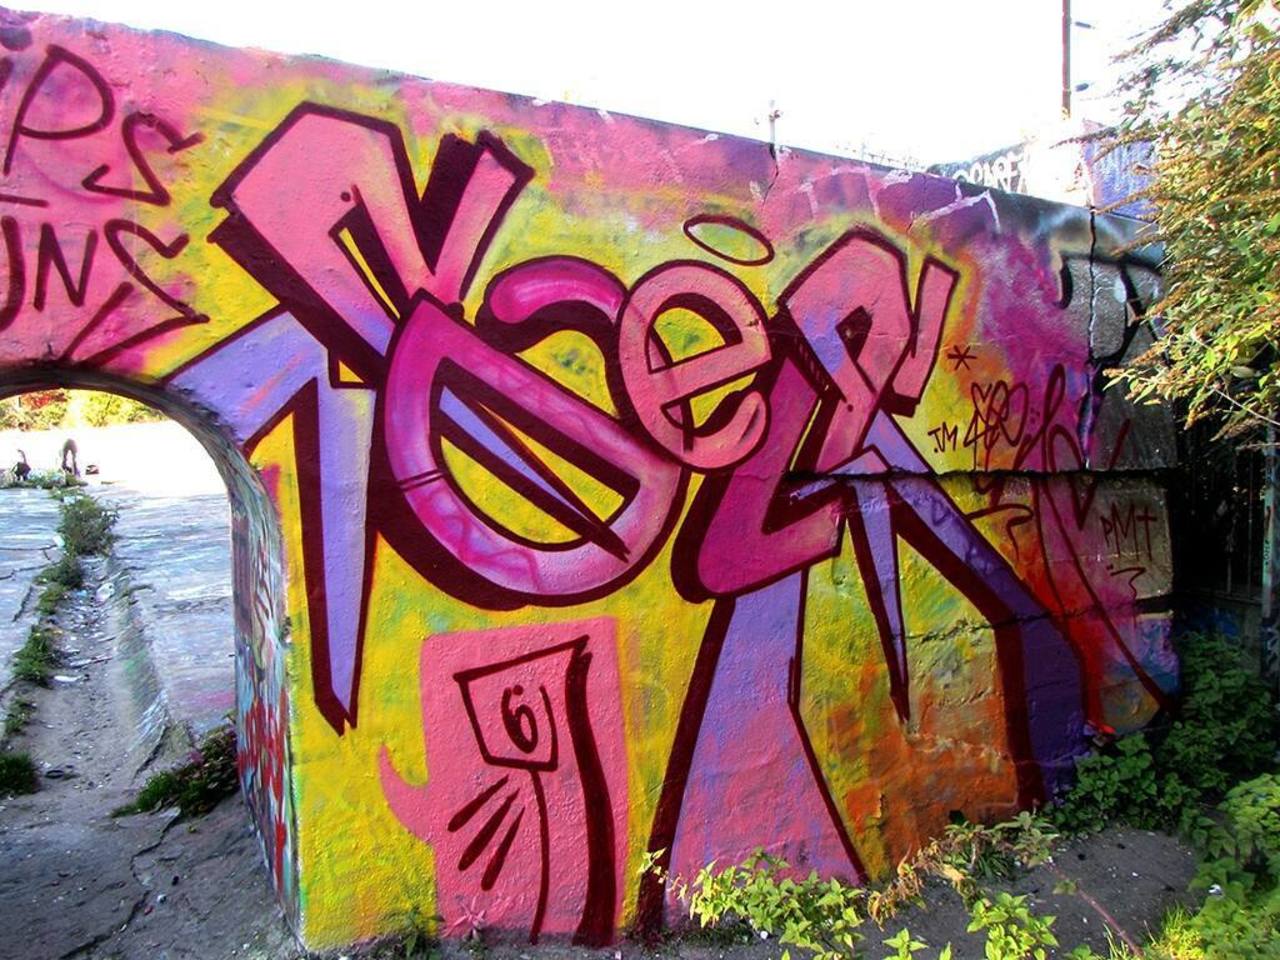 By @seeds_one 
#streetart #Graffiti #dsb_graff #tv_streetart #markfieldpark #londonstreetart #streetartlondon #graf… http://t.co/MEGZZ0RIsP